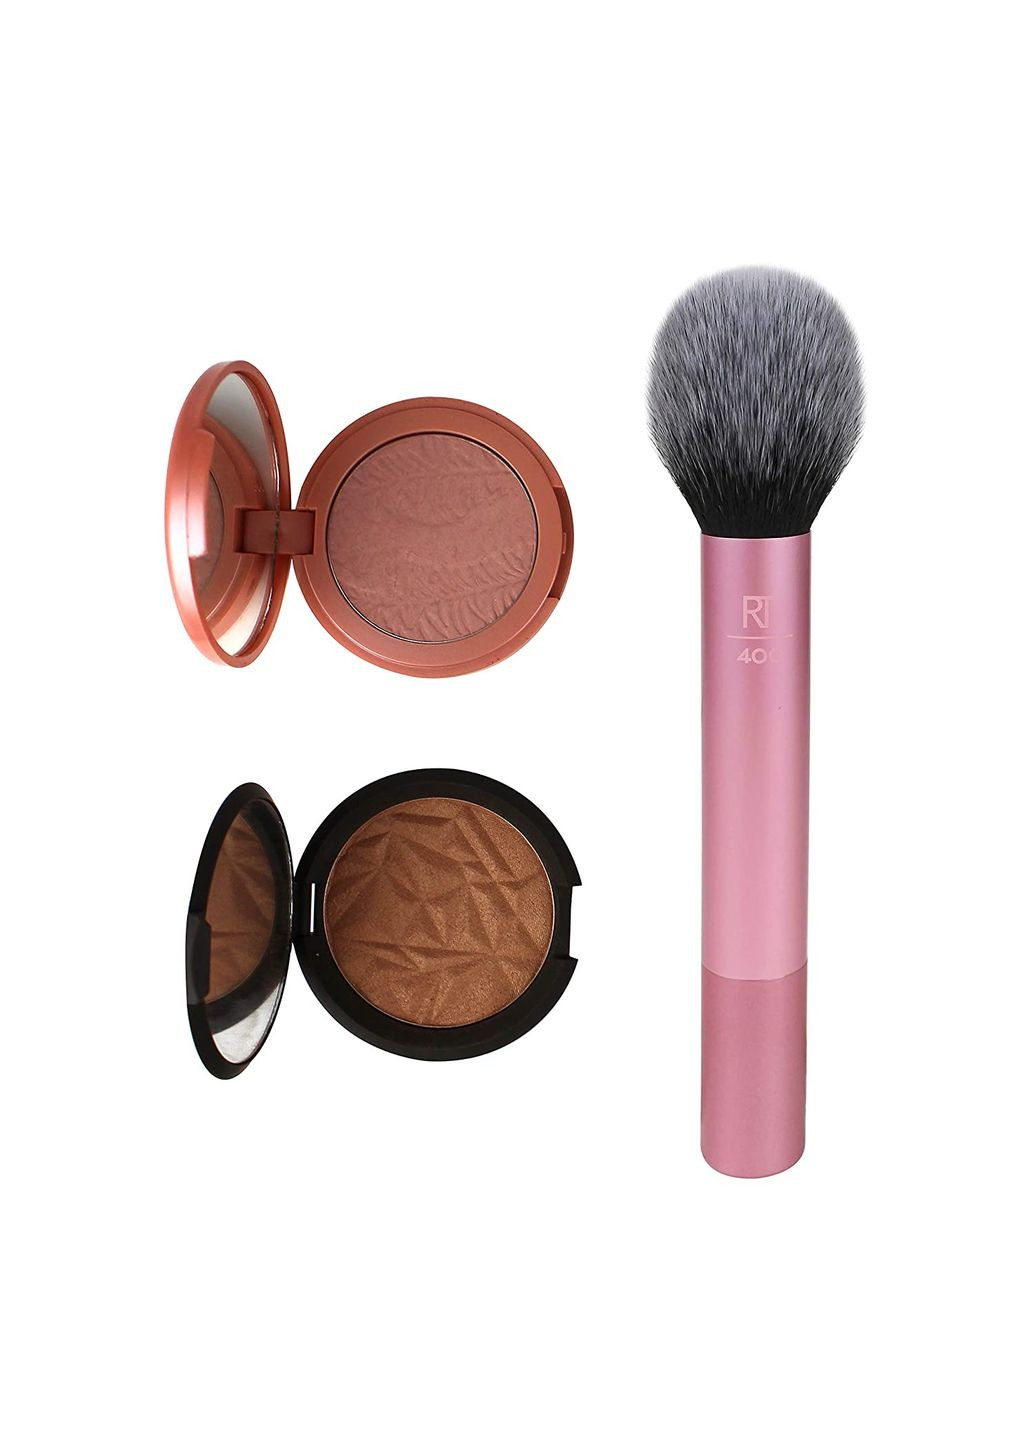 Кисть для макіяжу (Реал Технікс) Makeup Blush Brush for Powder Blush or Bronzer RT400 (18 см) Без упаковки Real Techniques (278773747)